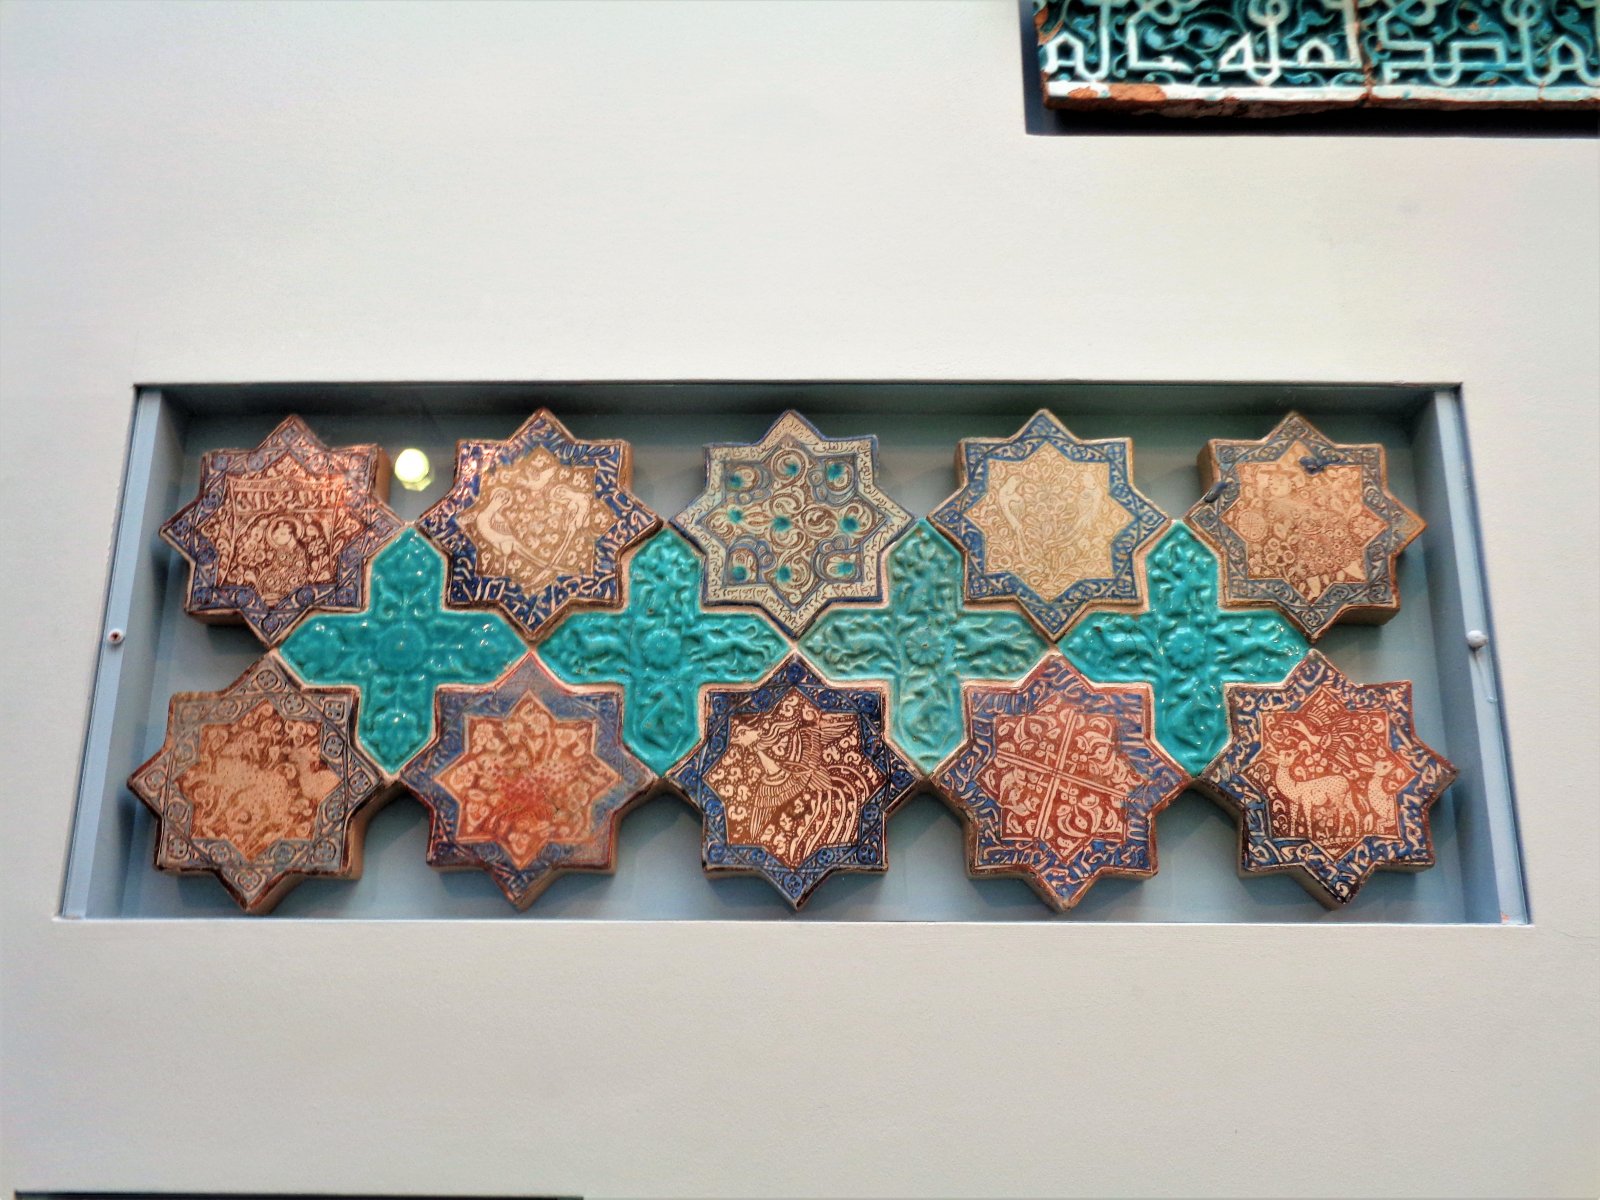 Berlin - Pergamon Museum 48 (Islamic Art).JPG